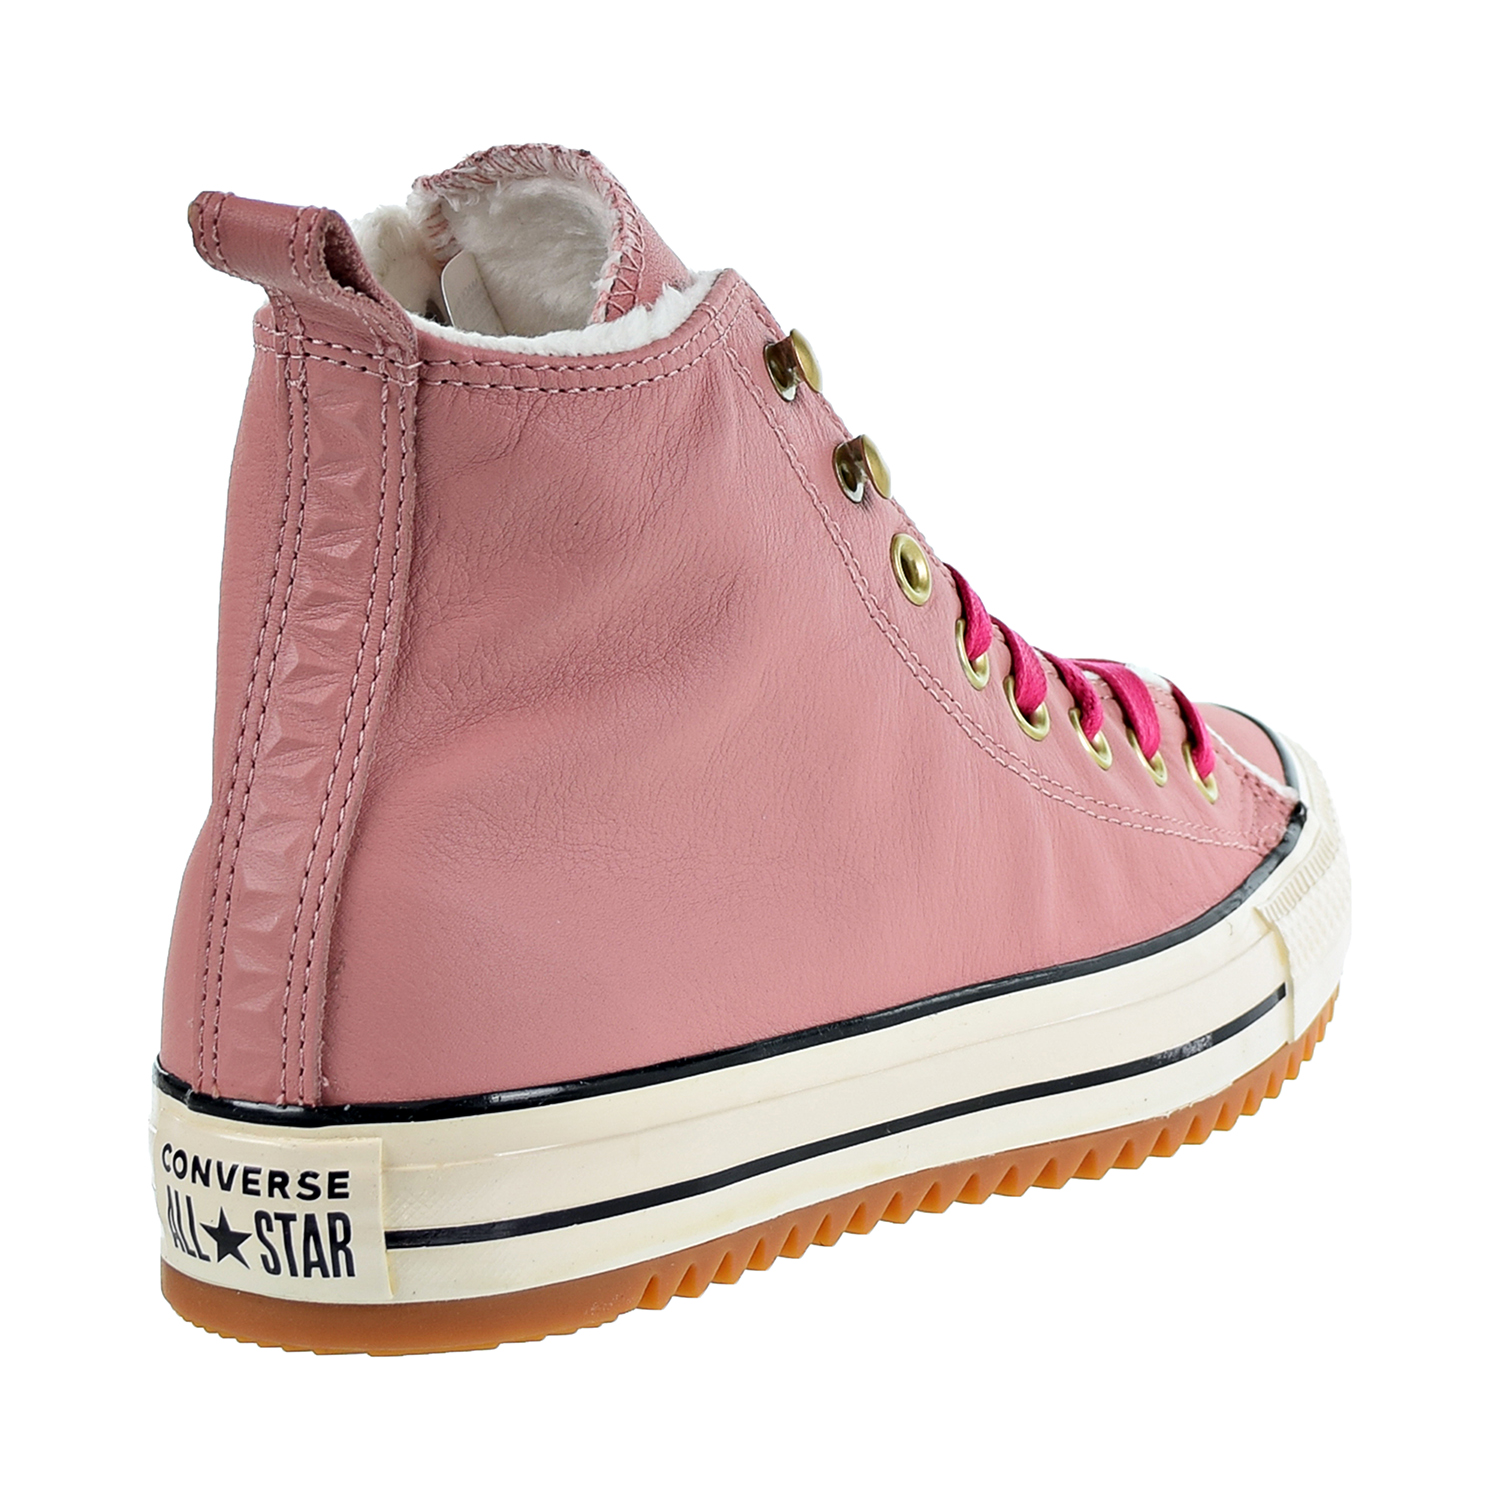 Converse Chuck Taylor All Star Hiker Boot Hi Unisex Sneakers Rust Pink/Pink Pop 162477c (10.5 D(M) US)